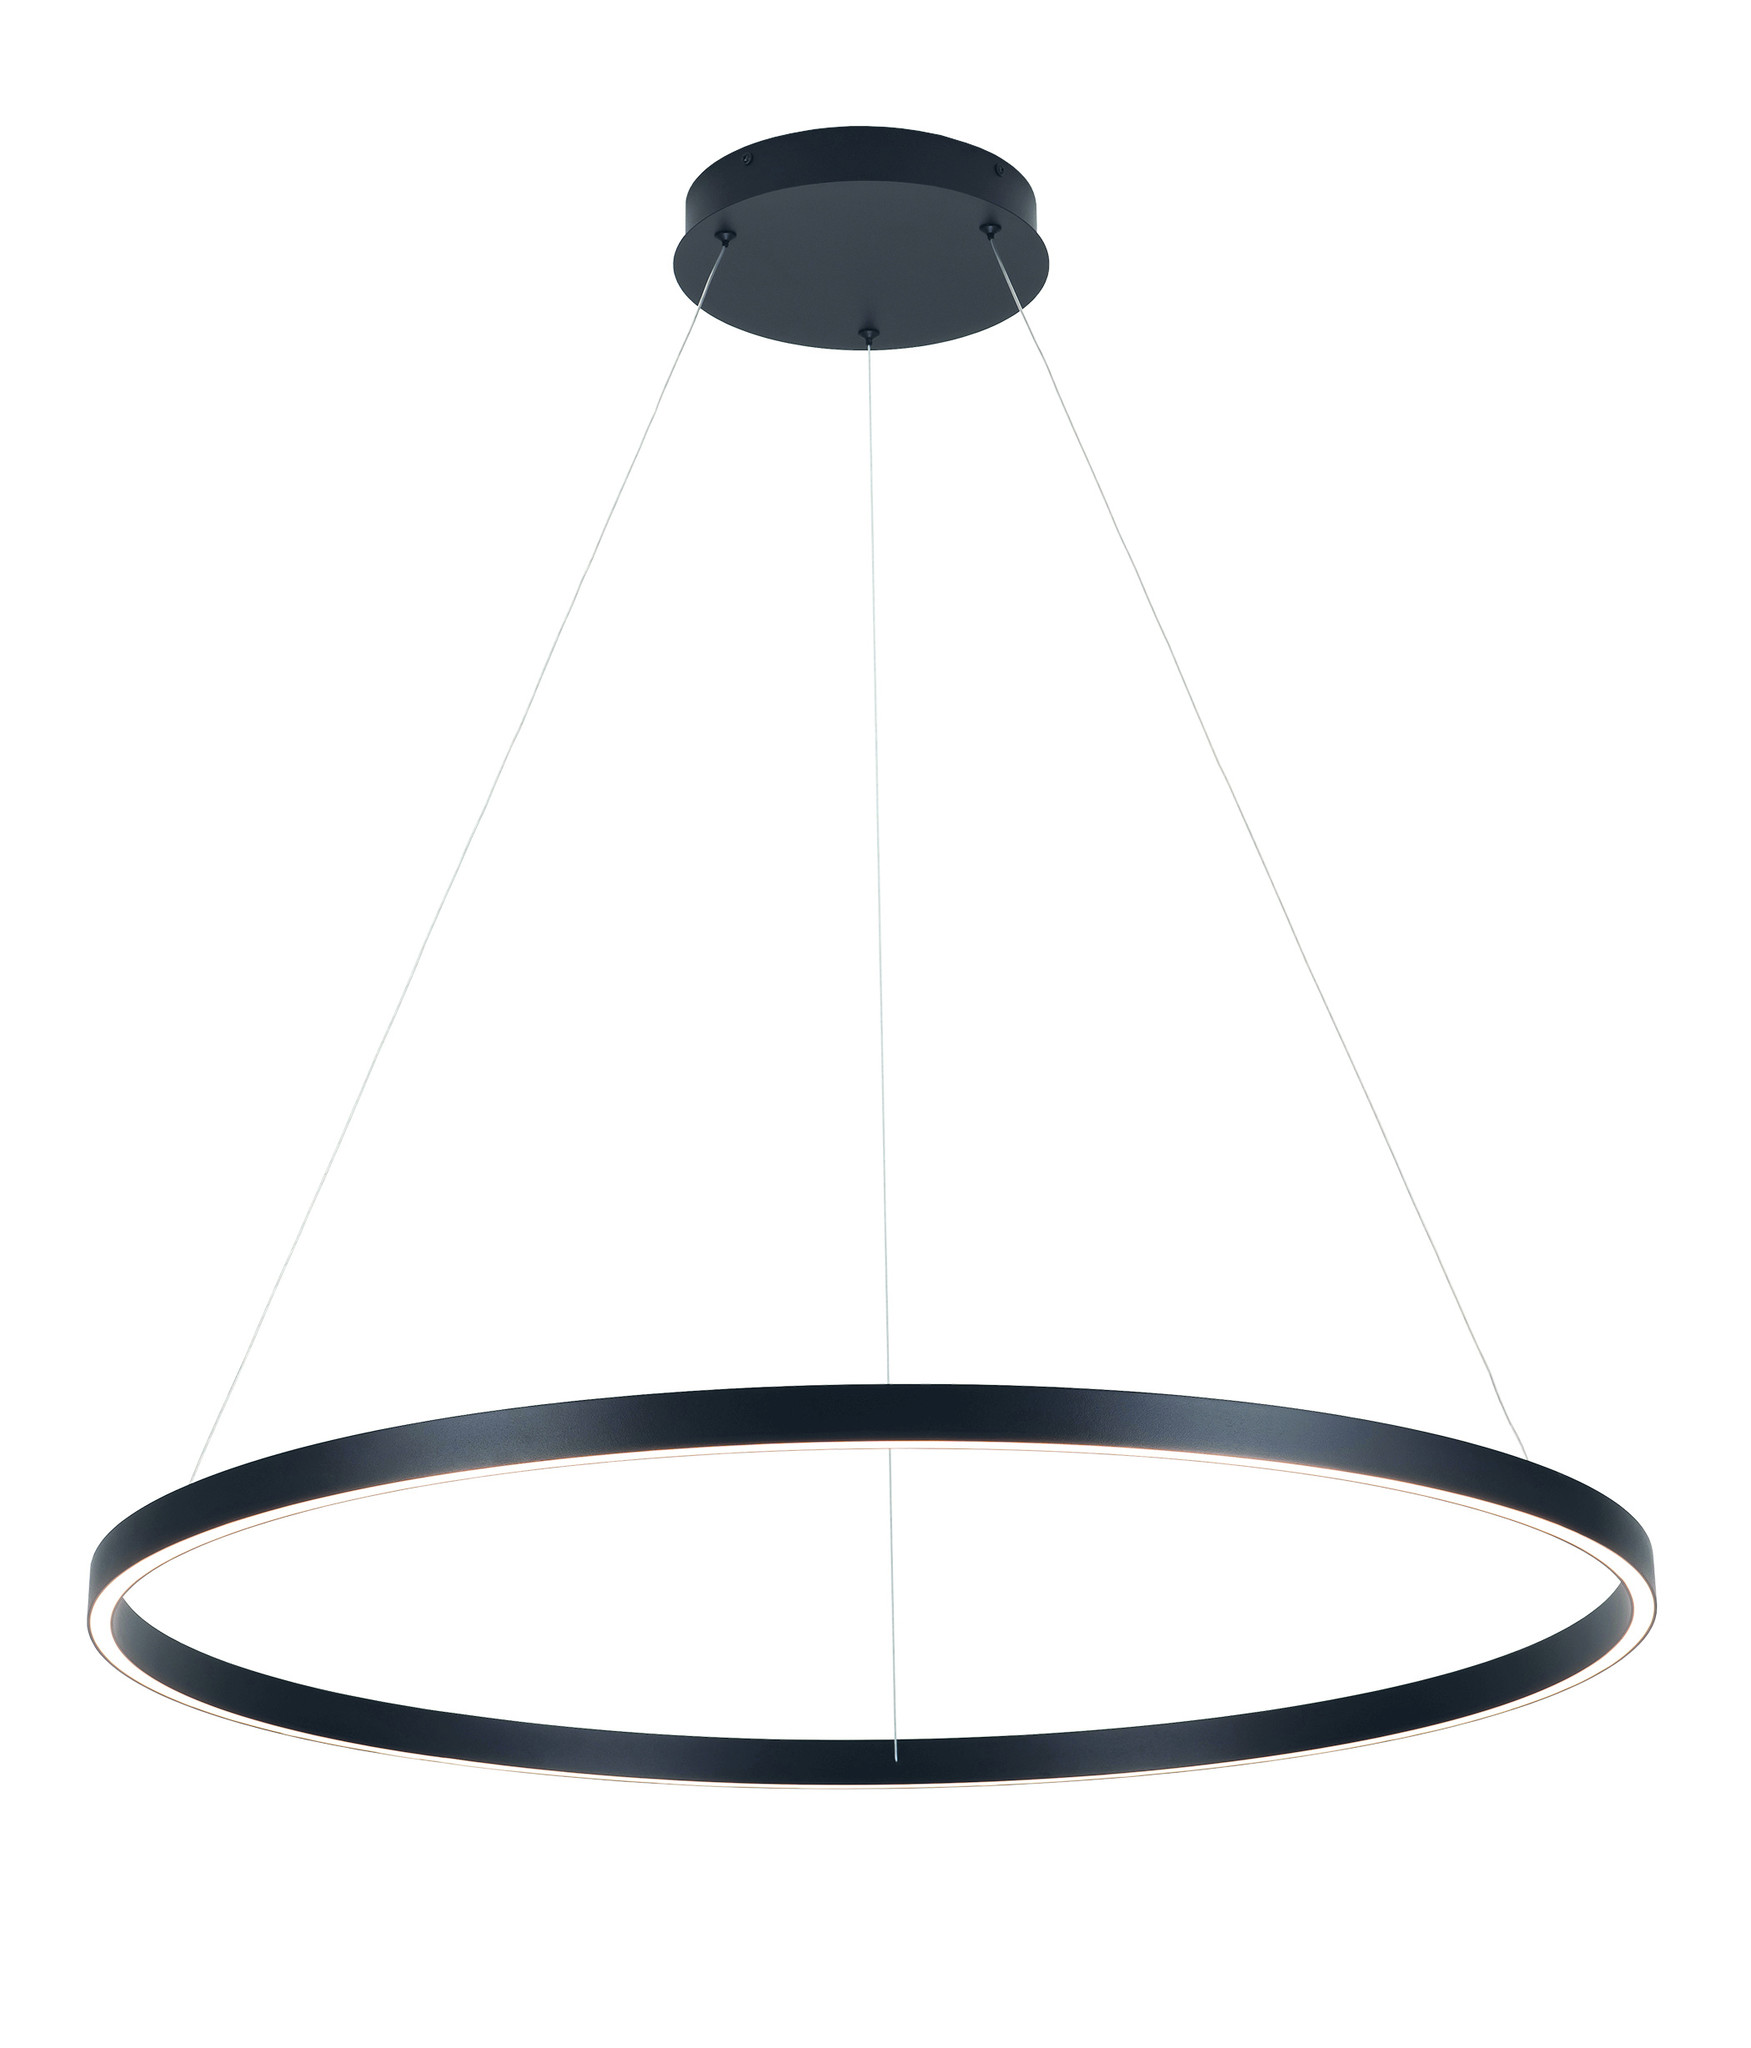 indruk gebruik Touhou Hanglamp design rond LED zwart of wit 76W 900mm Ø licht up en down | My  Planet LED